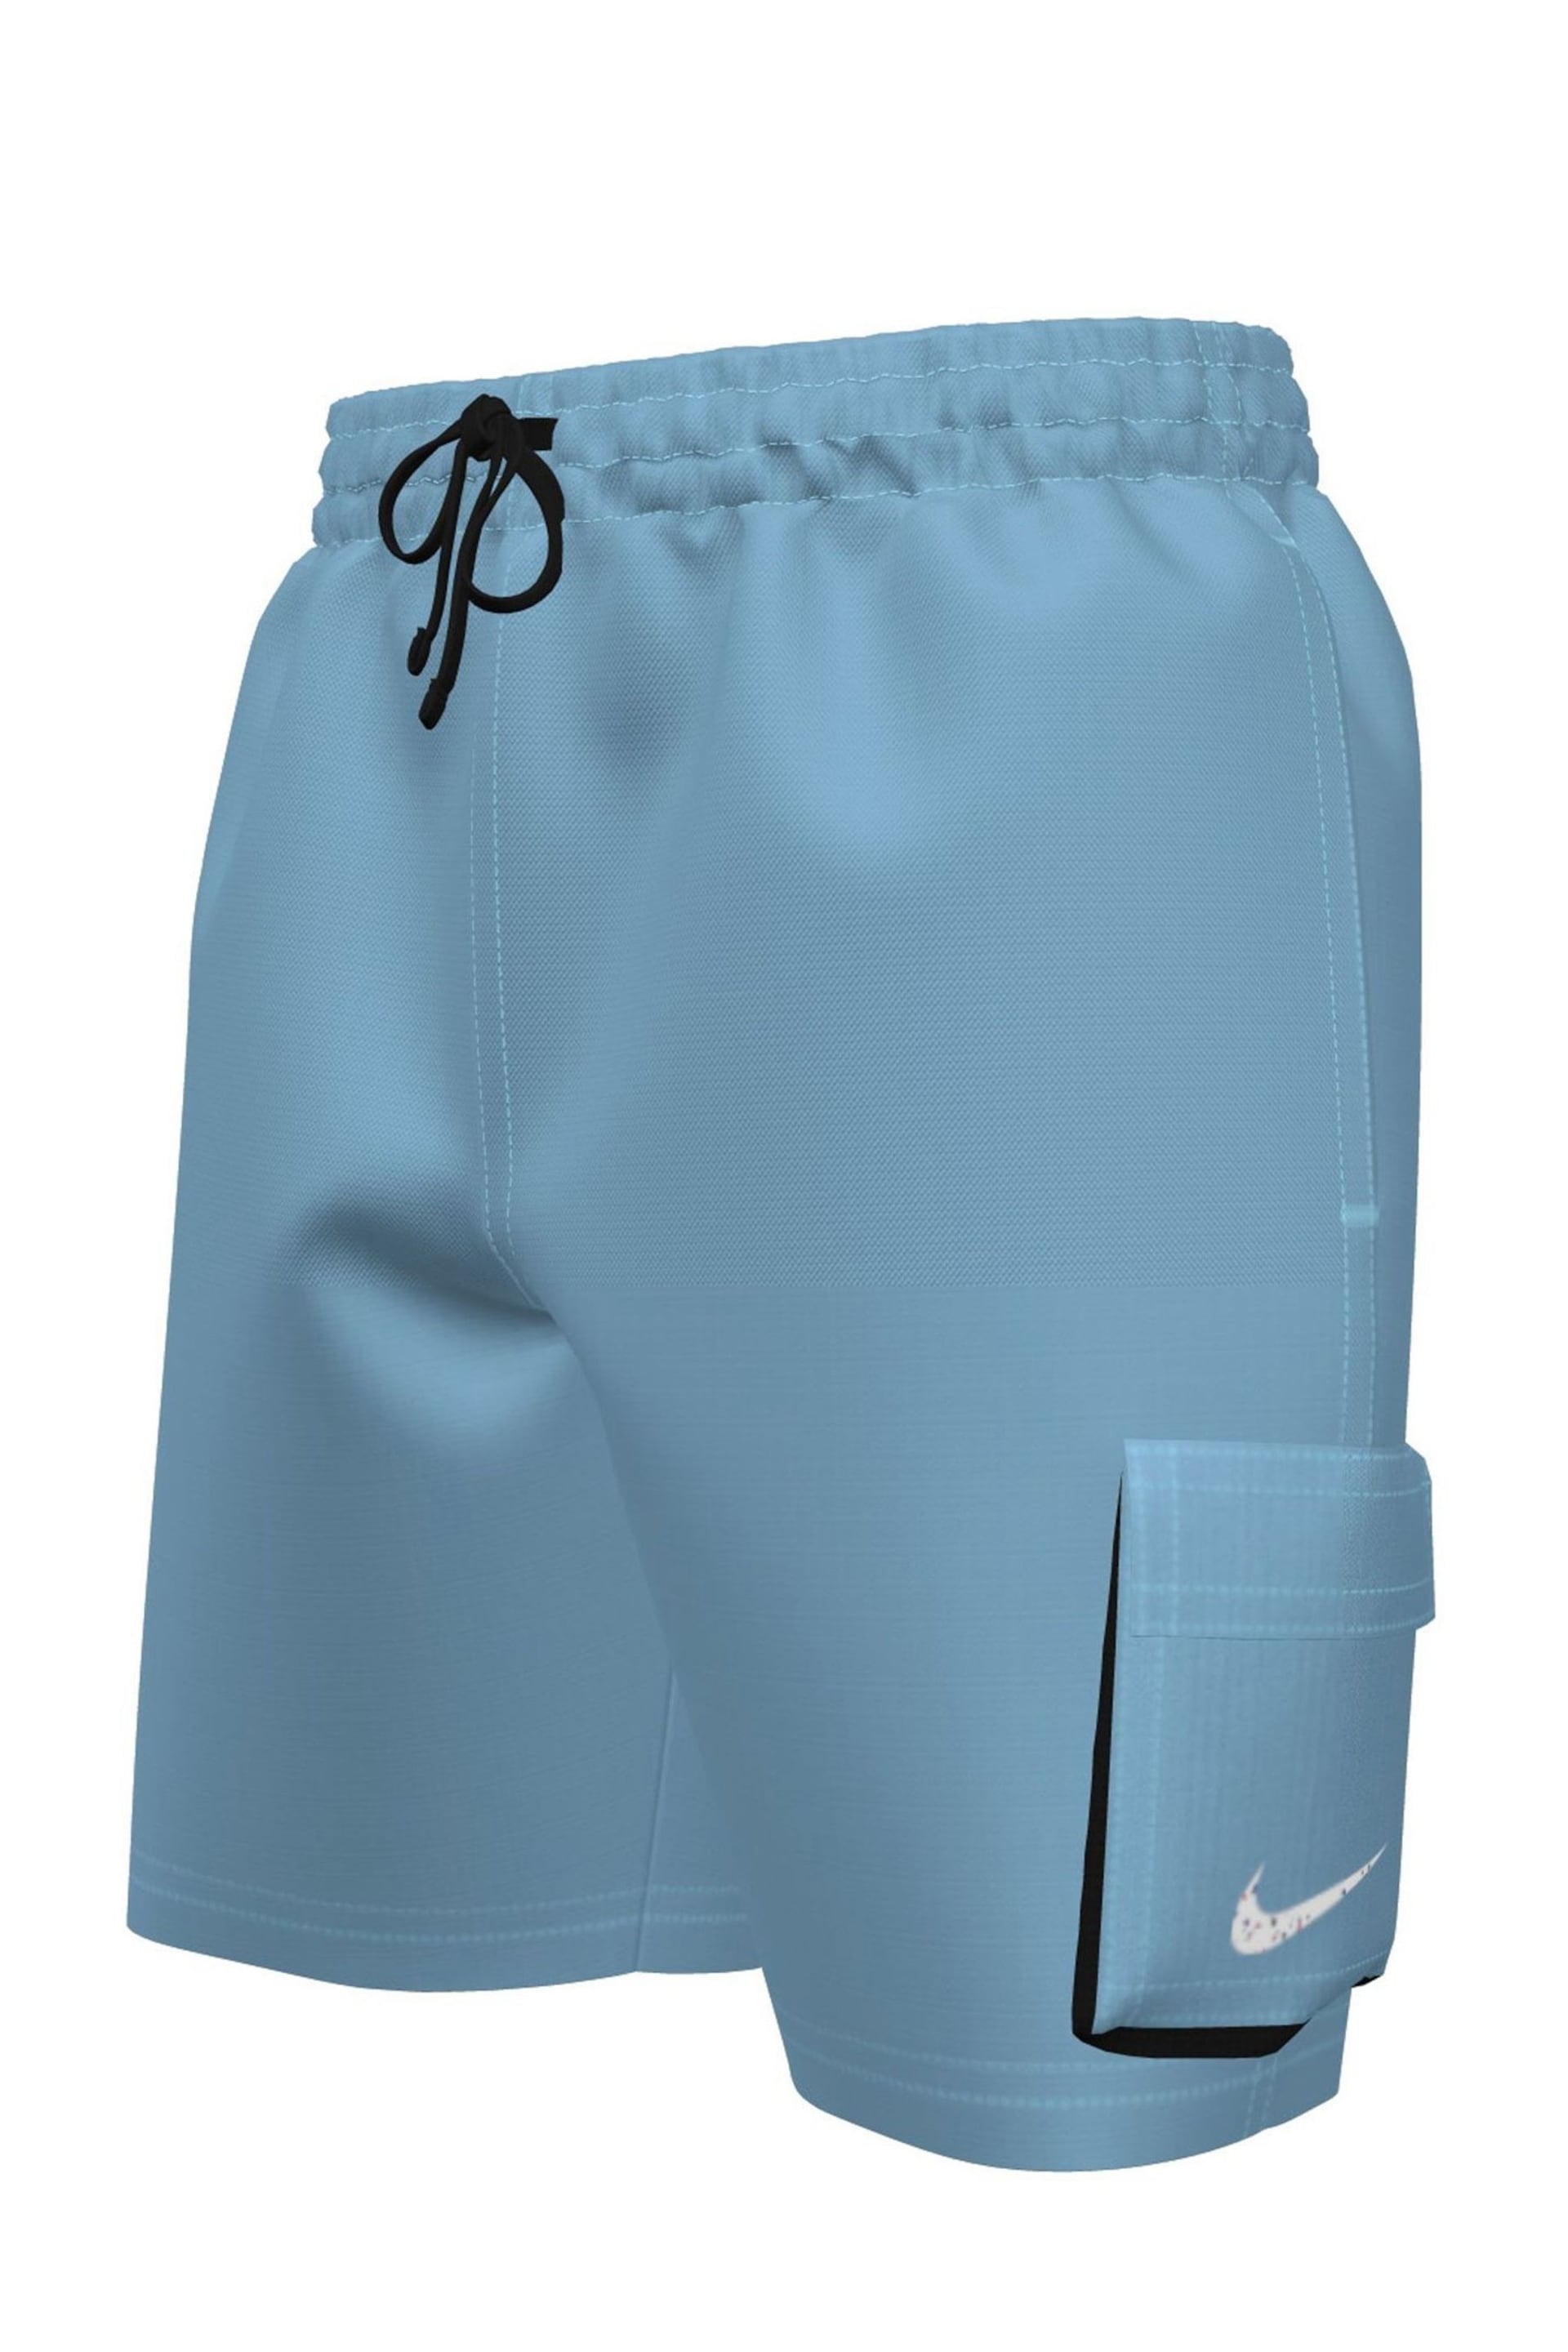 Nike Light Blue Nike Swim Cargo Pocket 6 Inch Volley Shorts - Image 7 of 9